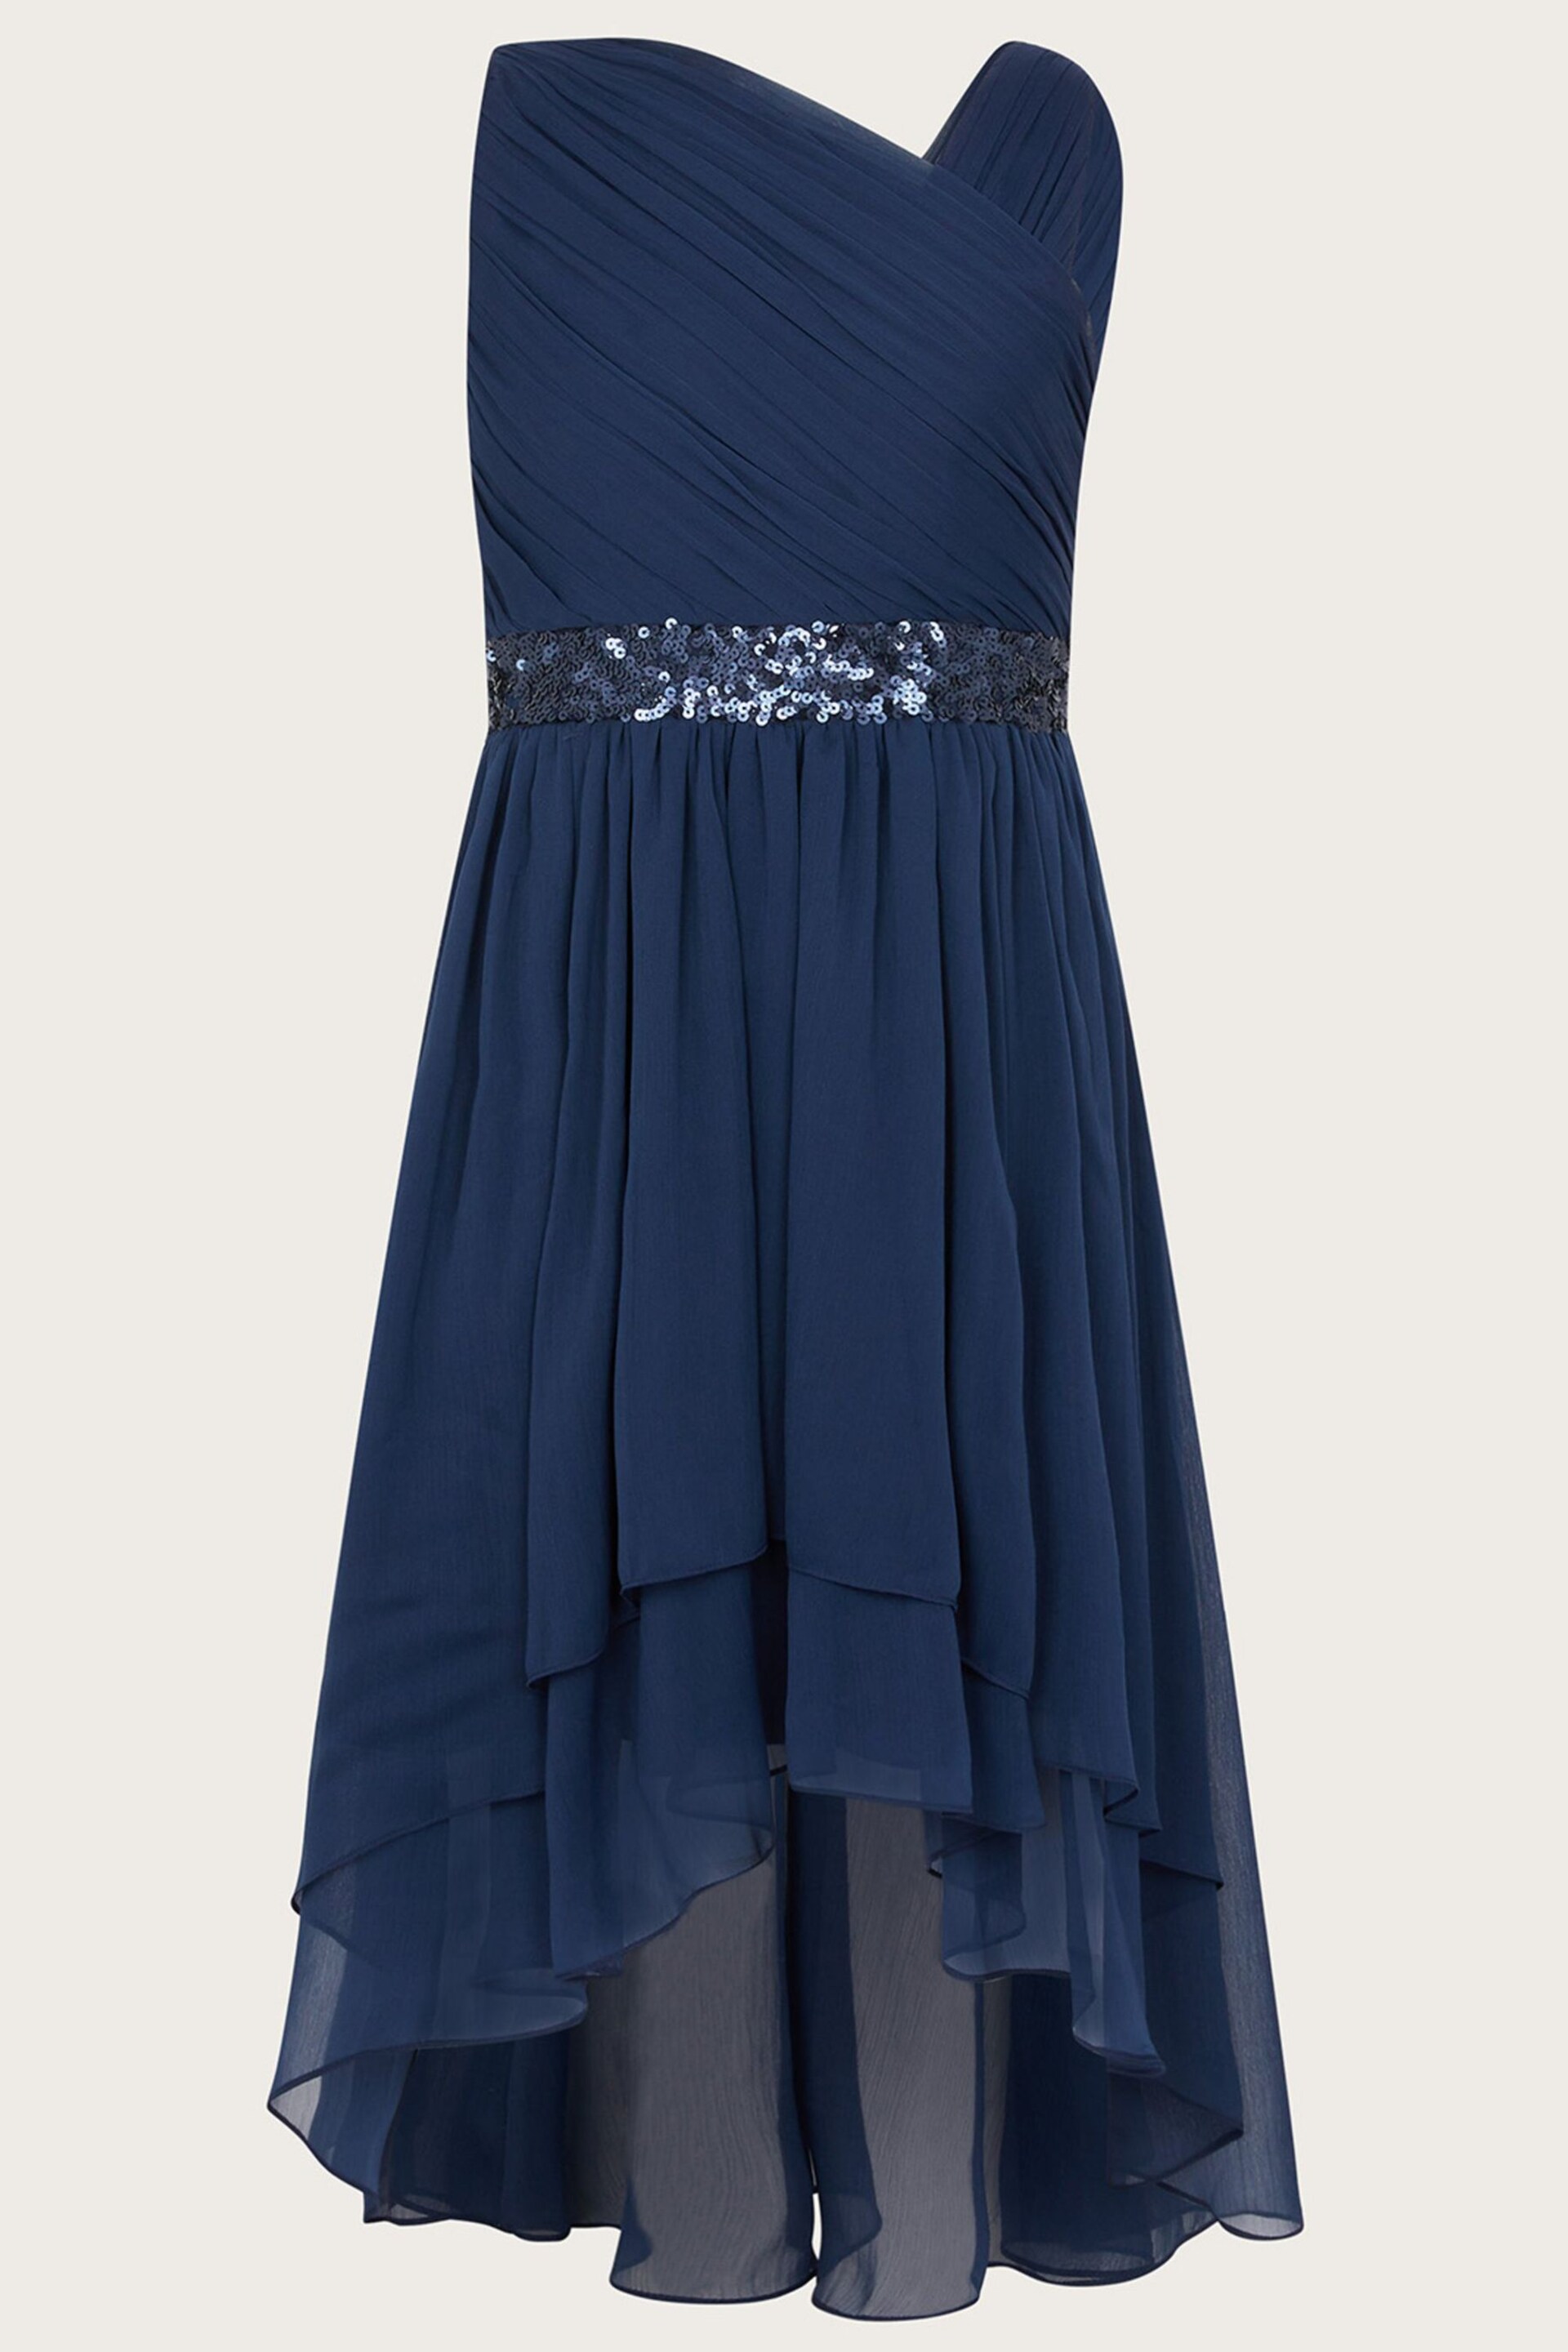 Monsoon Blue Abigail One-Shoulder Prom Dress - Image 1 of 2